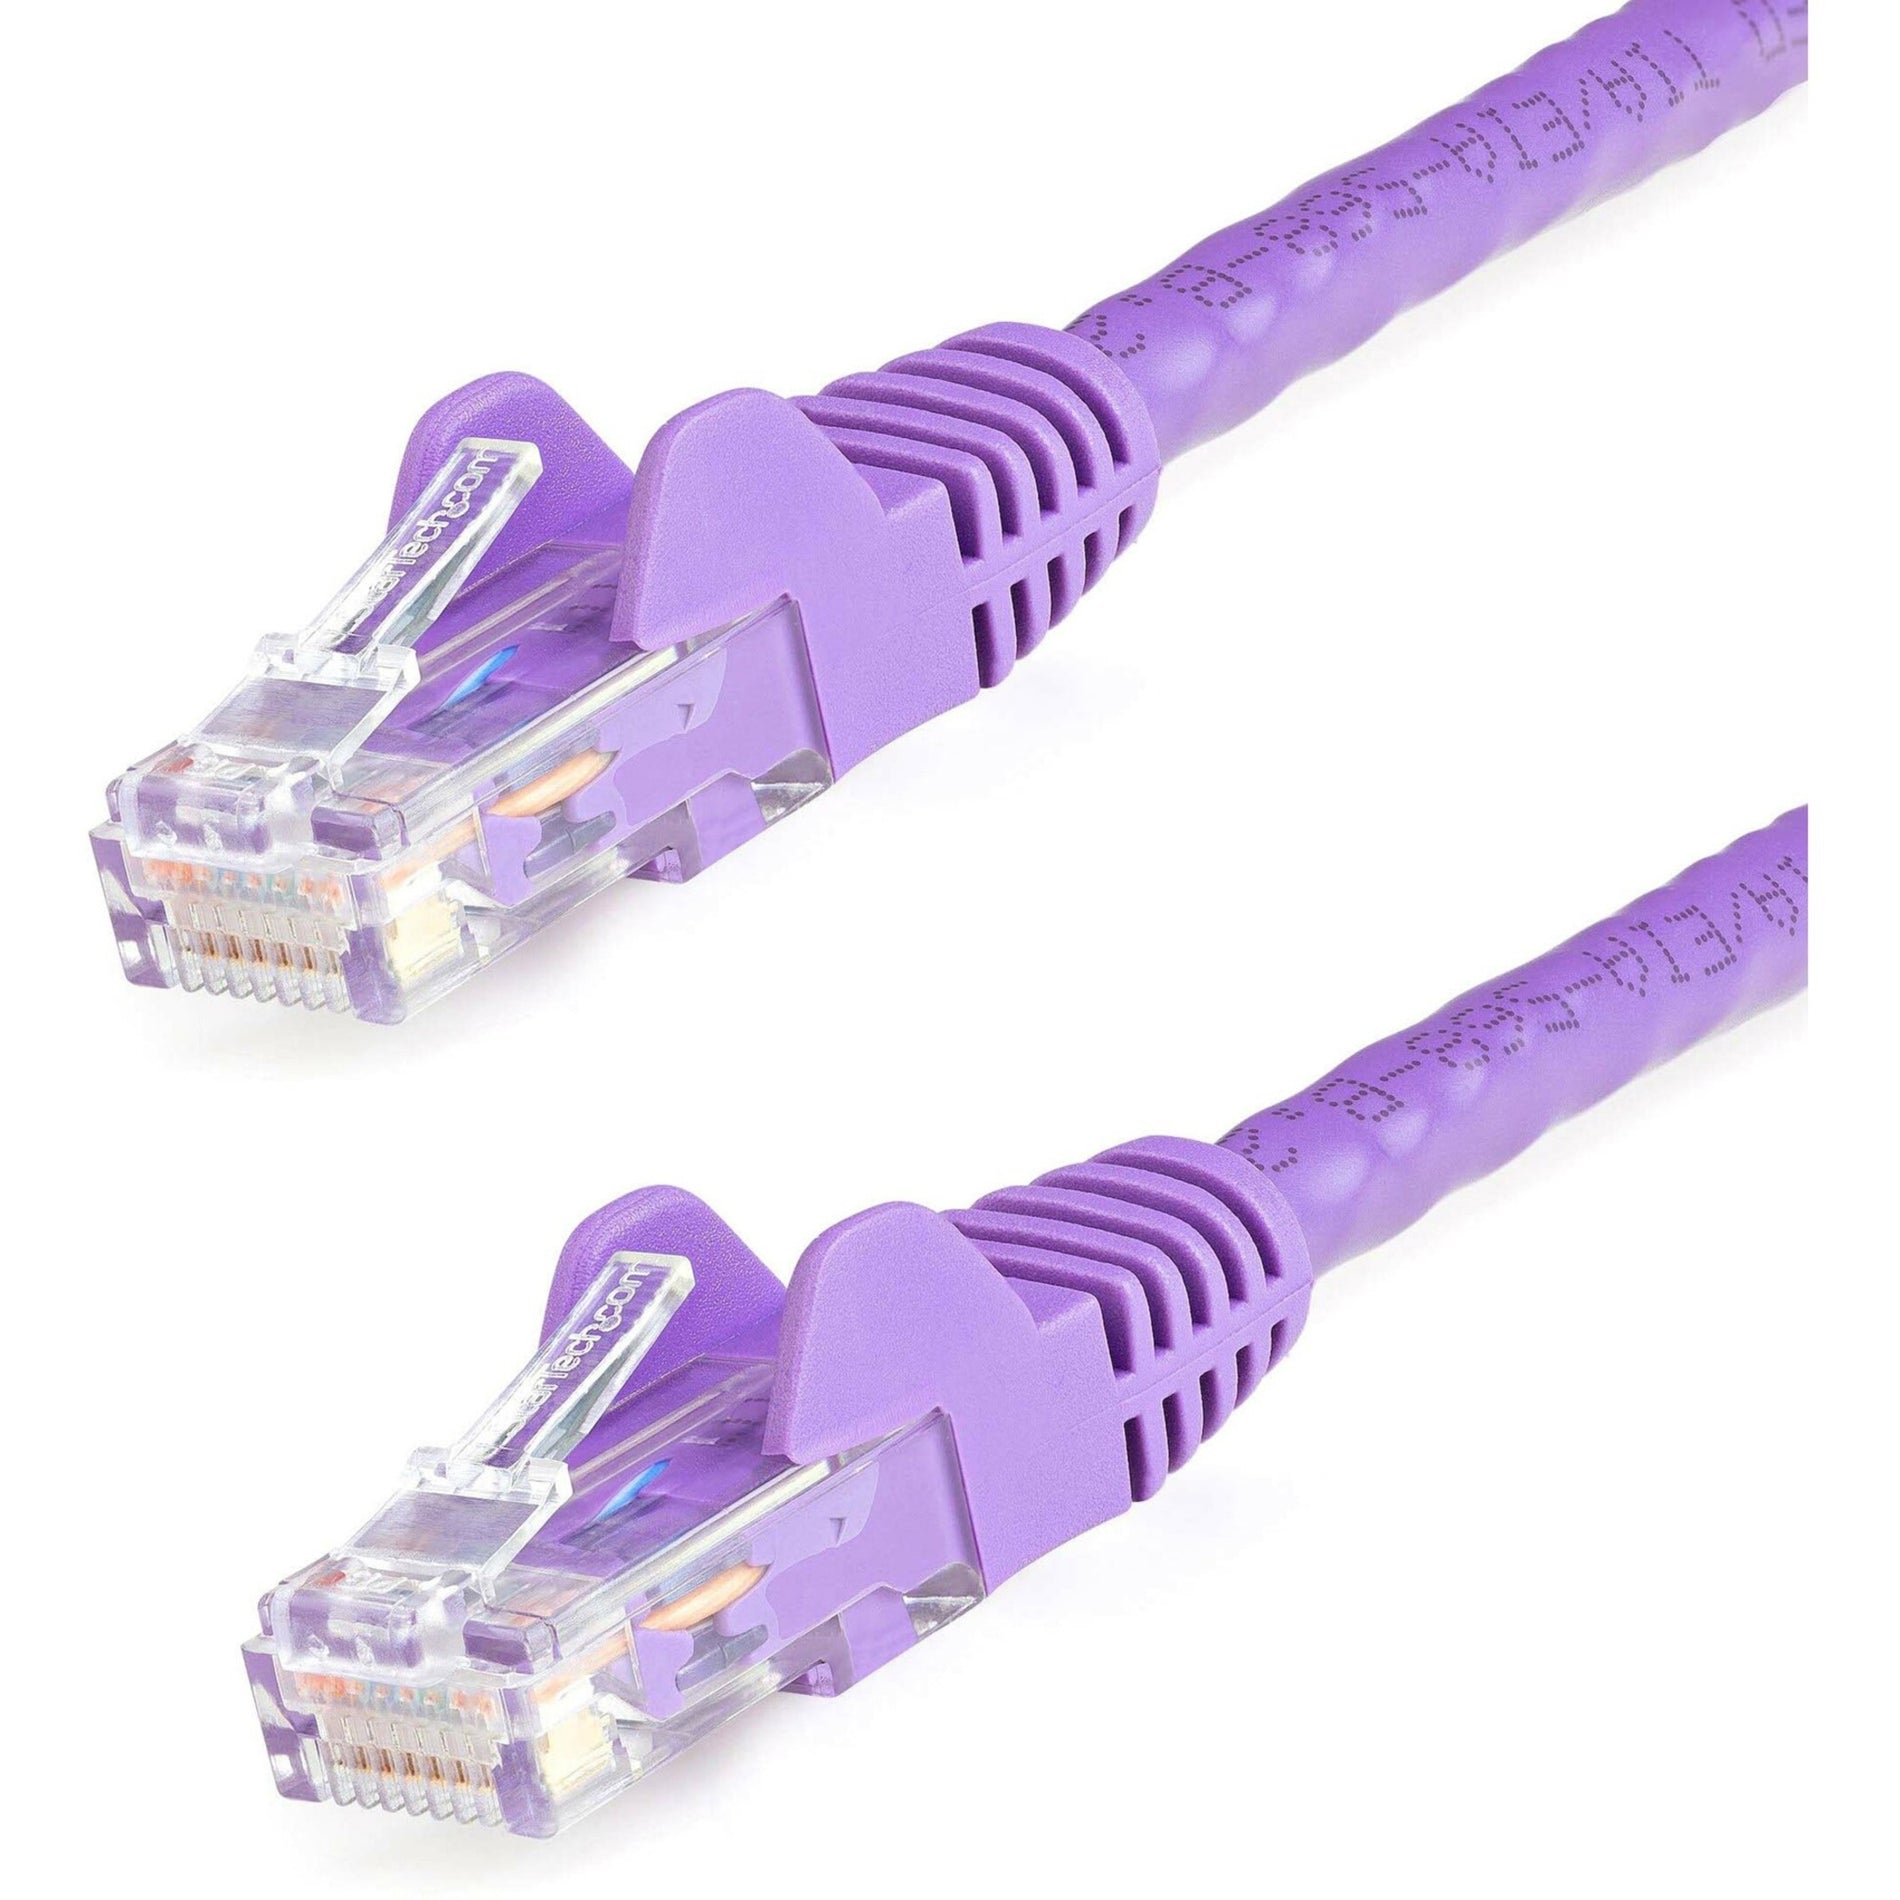 StarTech.com N6PATCH6PL Cat6 Patch Cable, 6 ft Purple Ethernet Cable with Snagless RJ45 Connectors